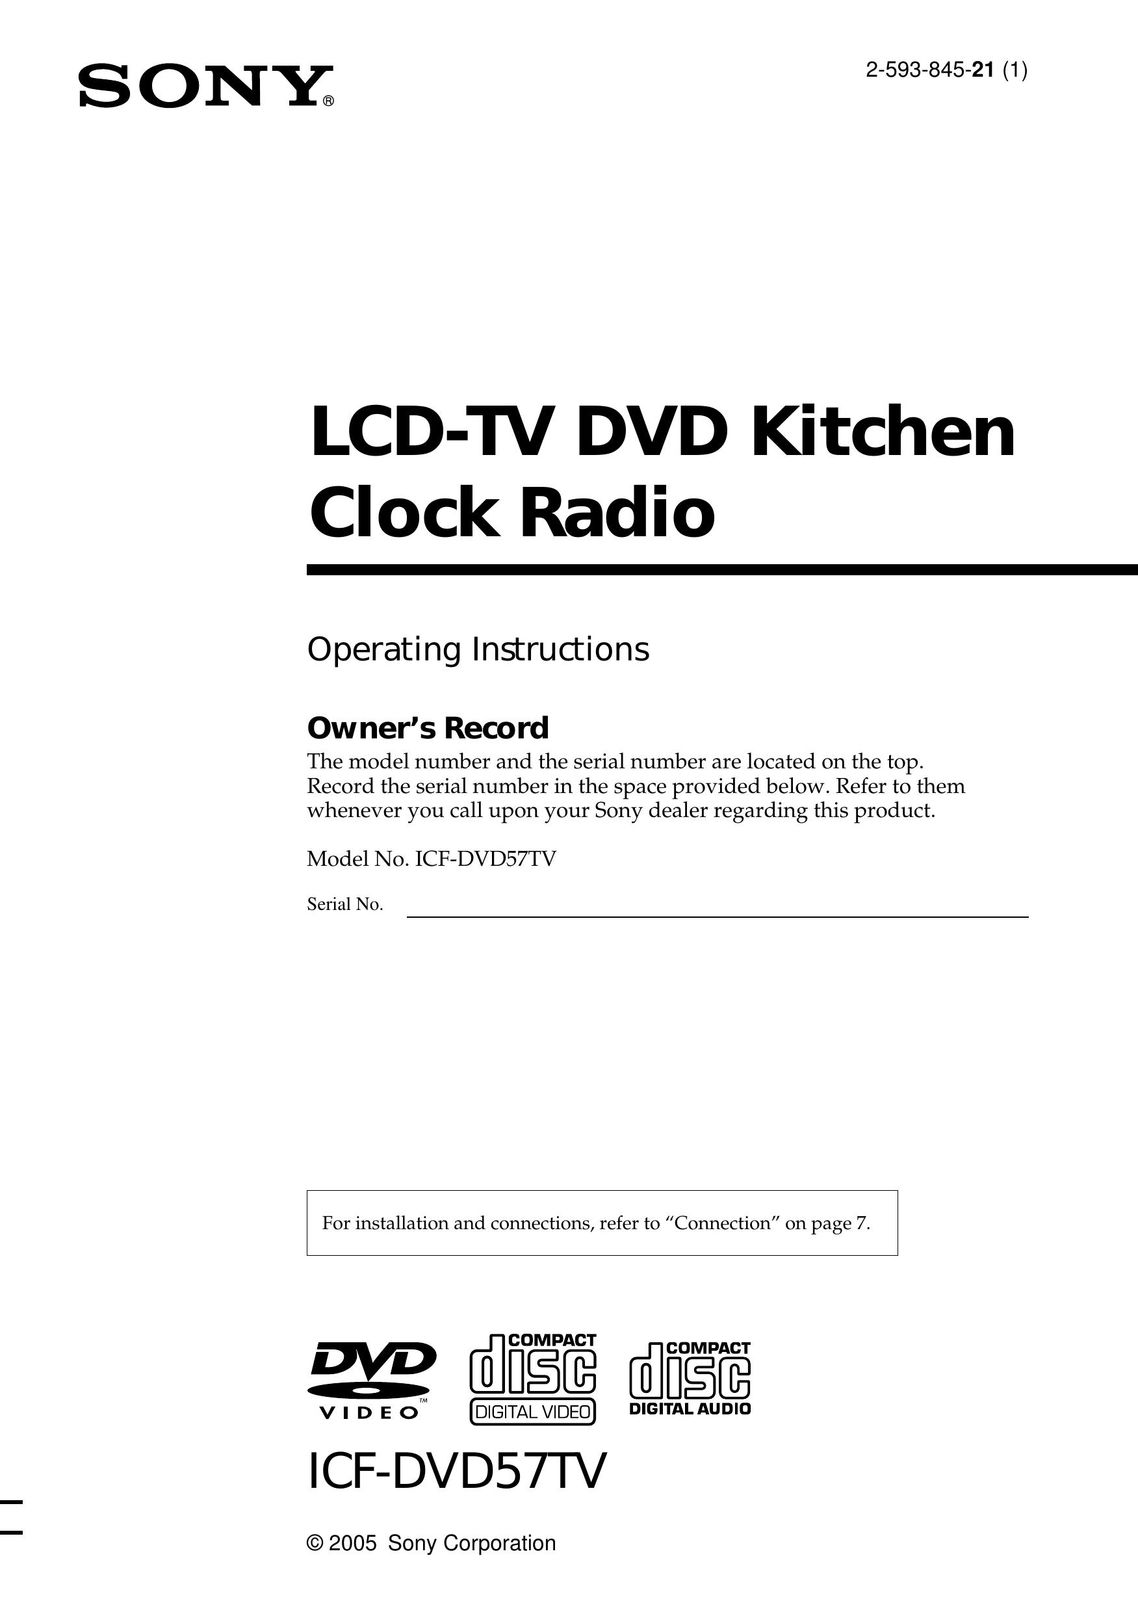 Sony ICF-DVD57TV TV DVD Combo User Manual